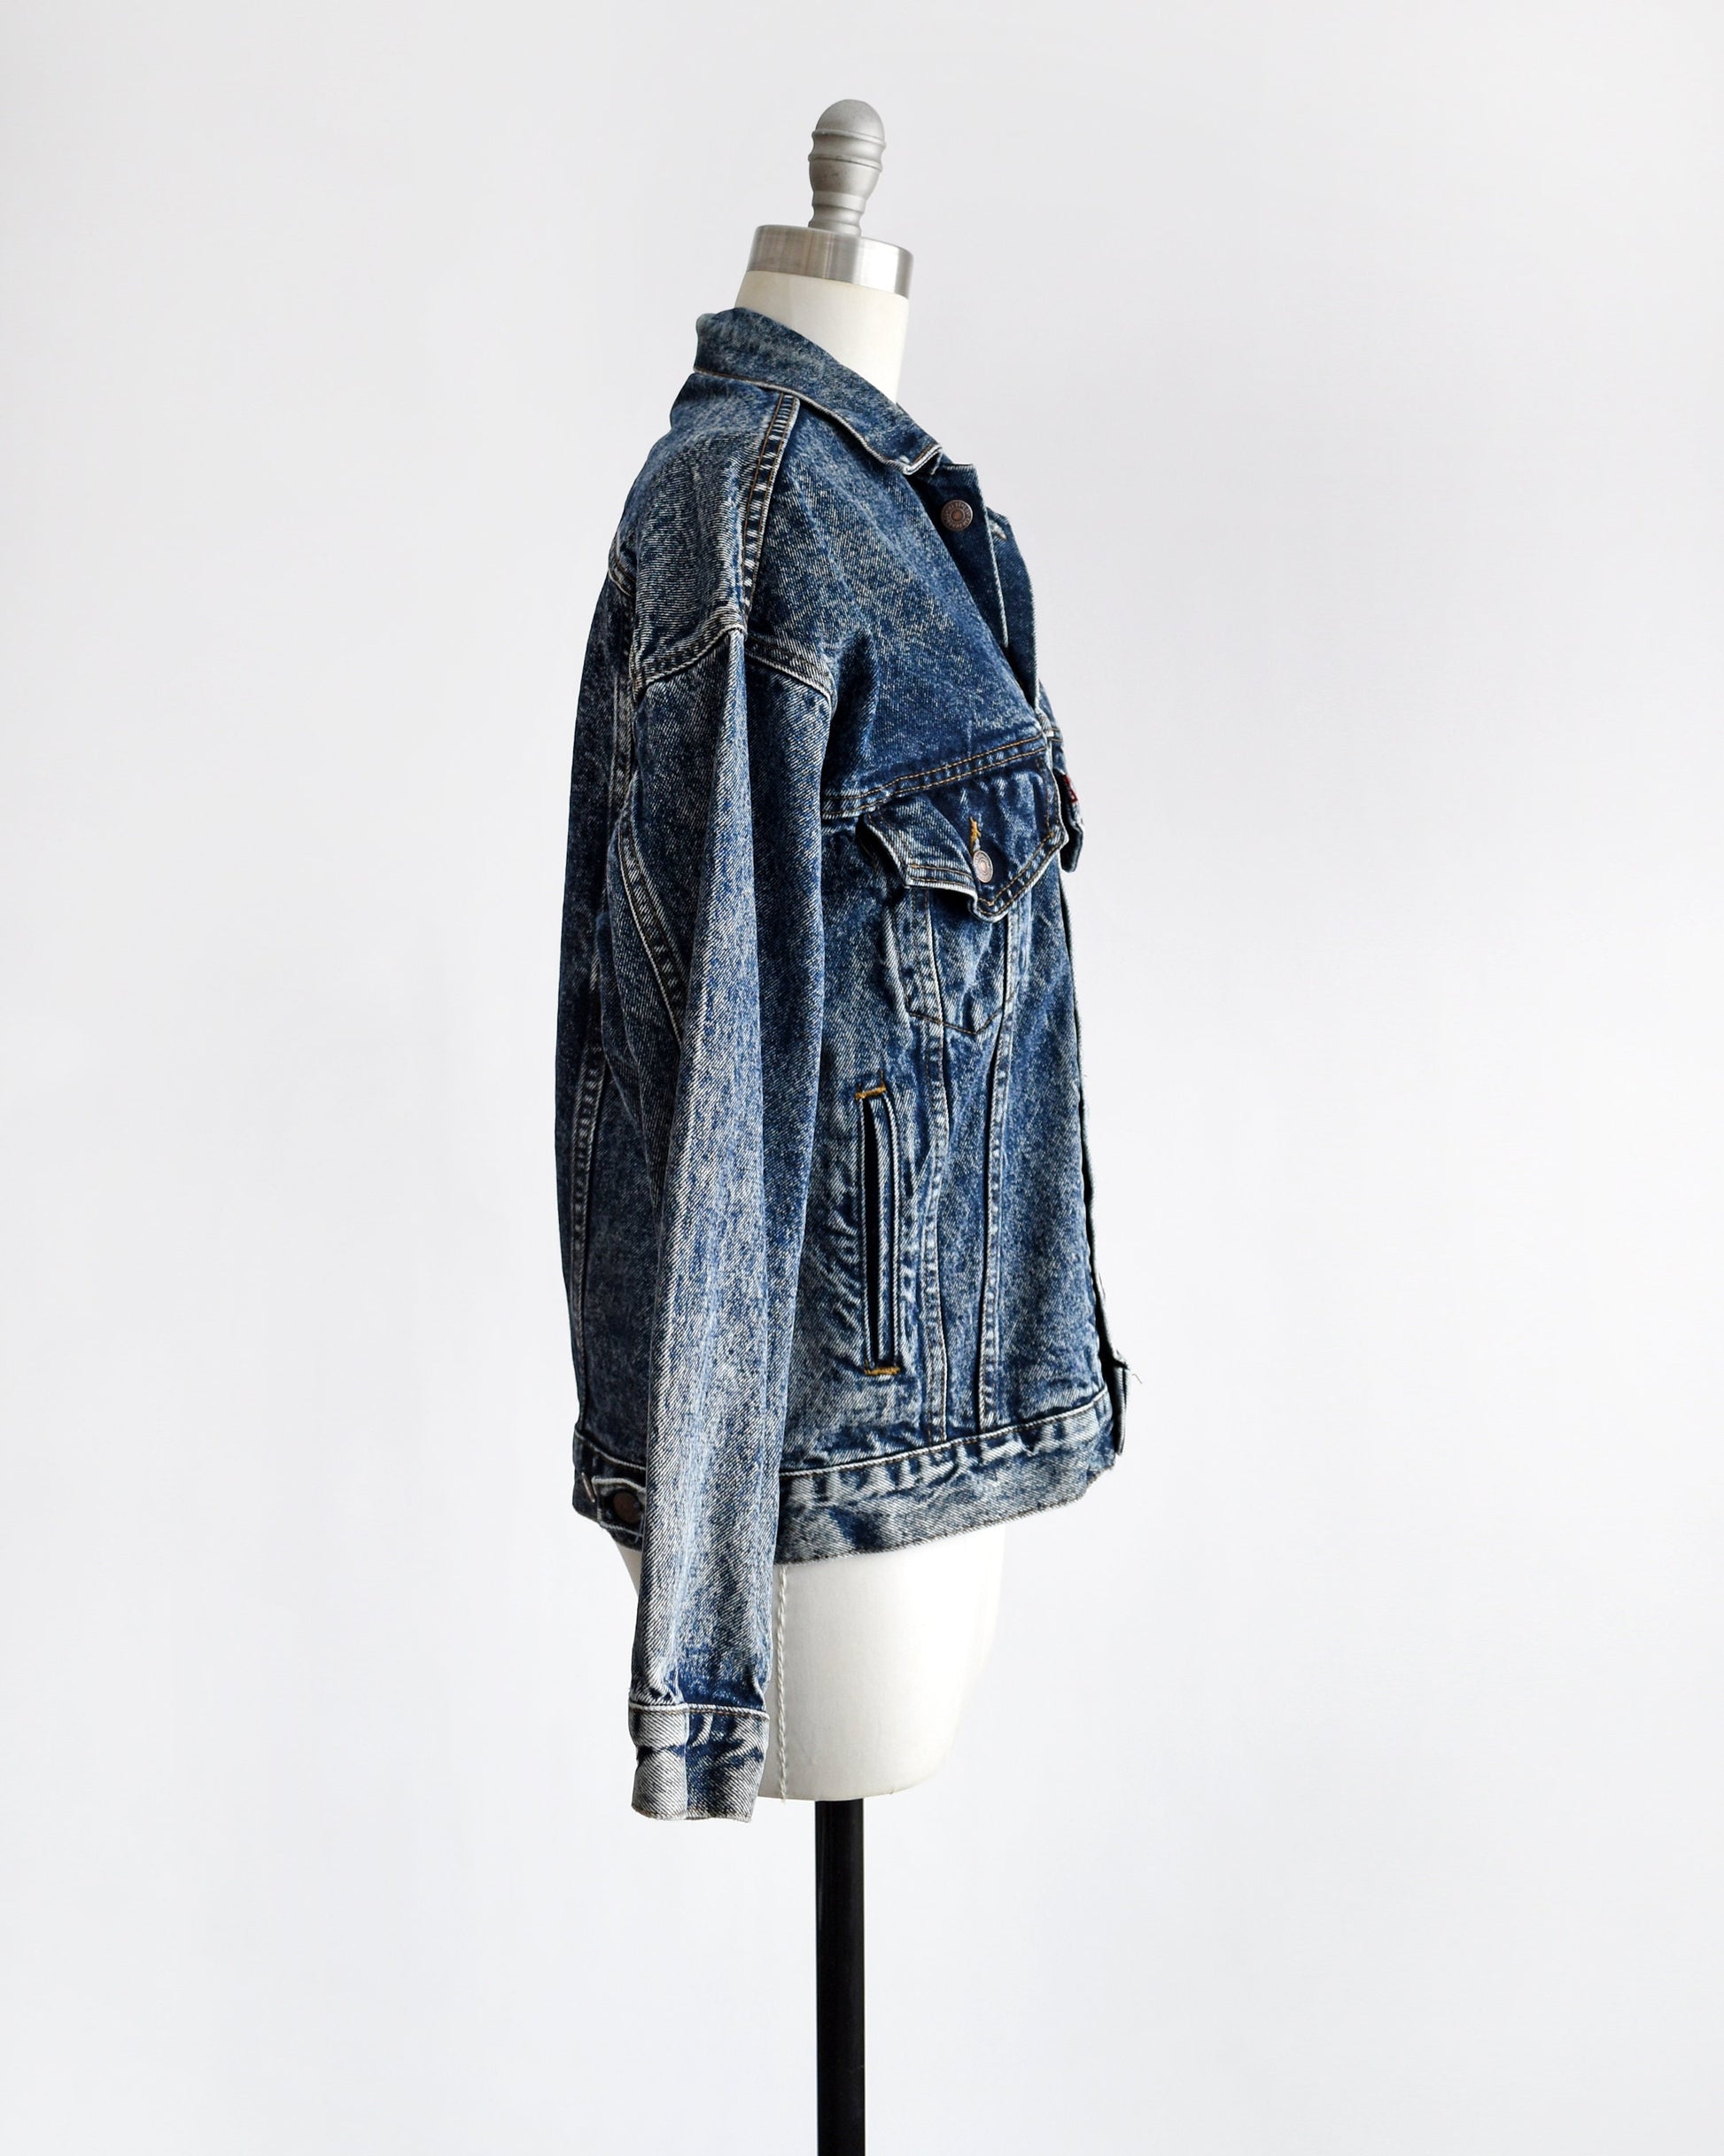 Side view of a vintage 80s Levis blue jean denim jacket button up on a dress form.